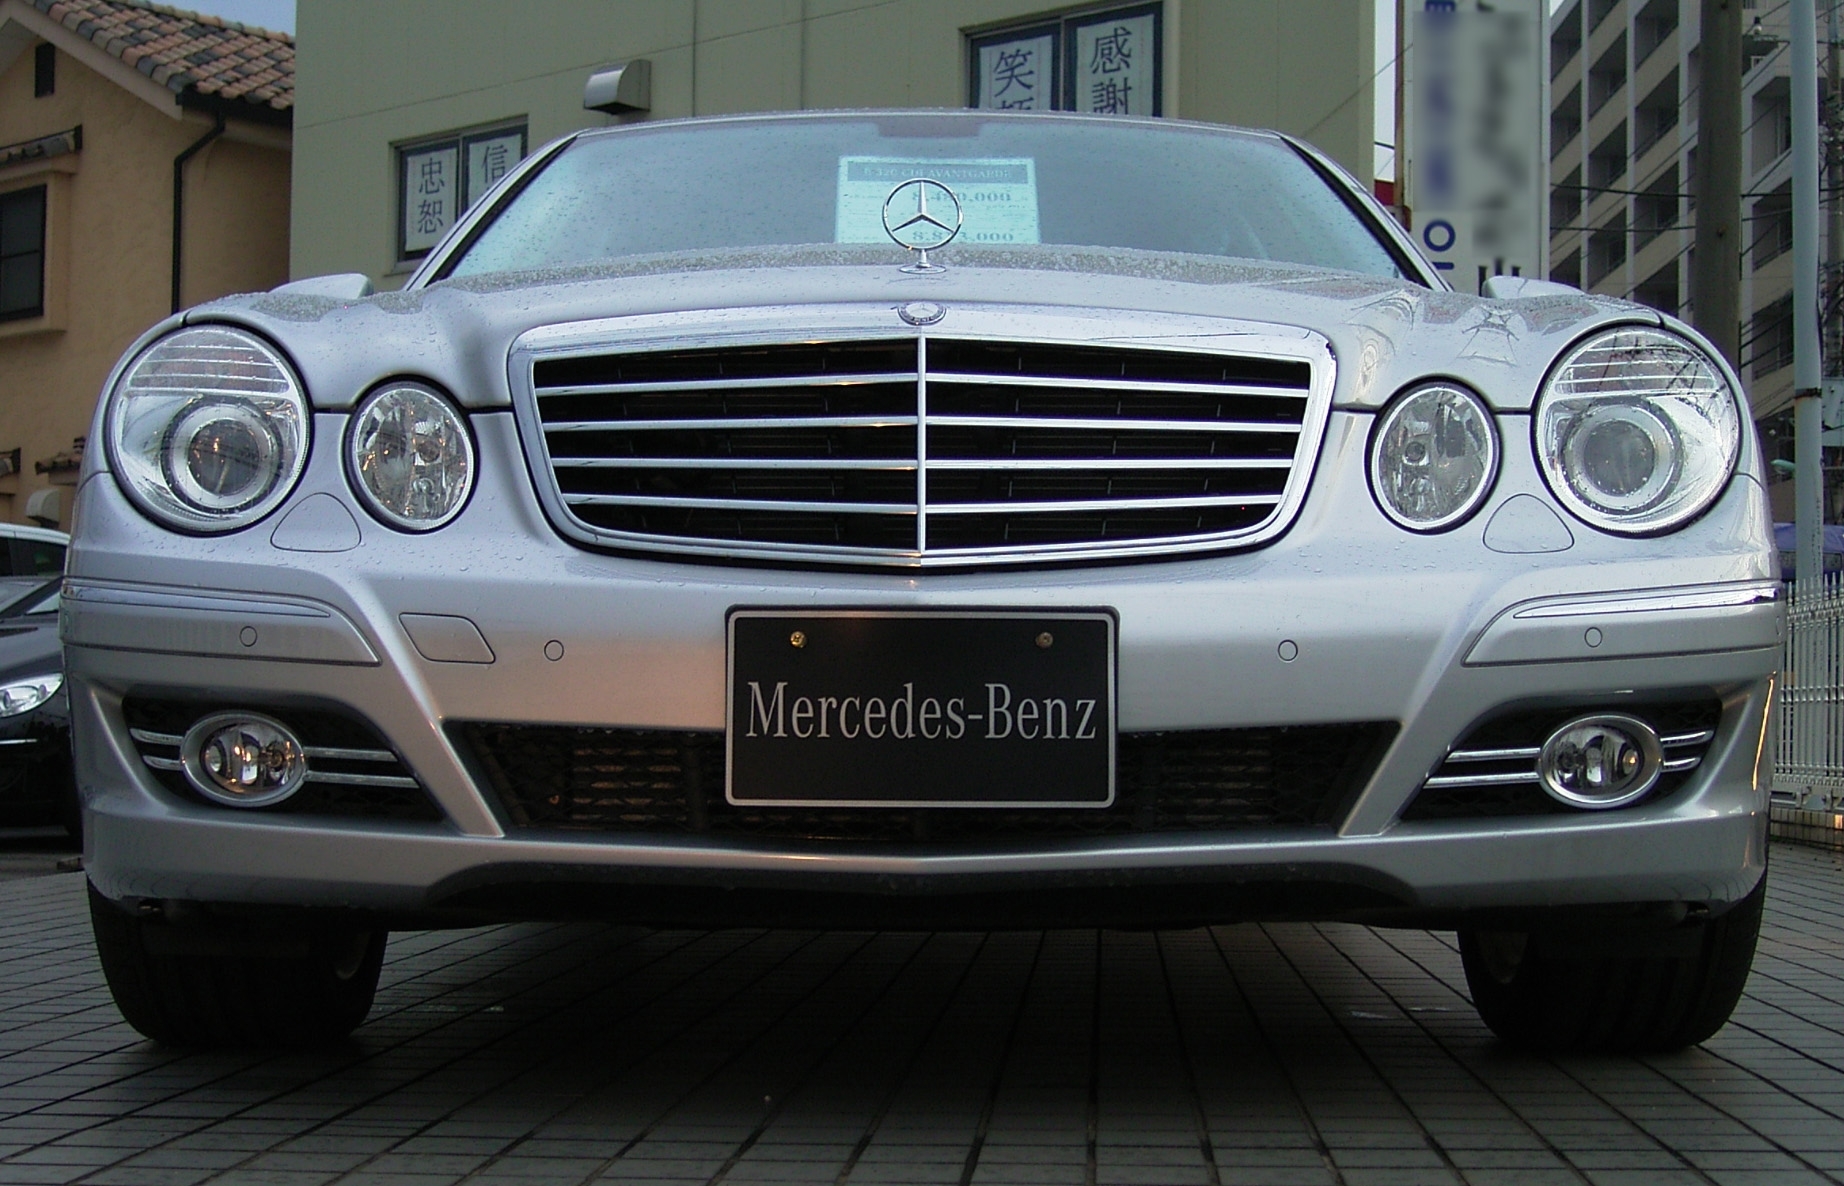 File:Mercedes-Benz -W211- E320 ja-5.jpg - Wikimedia Commons